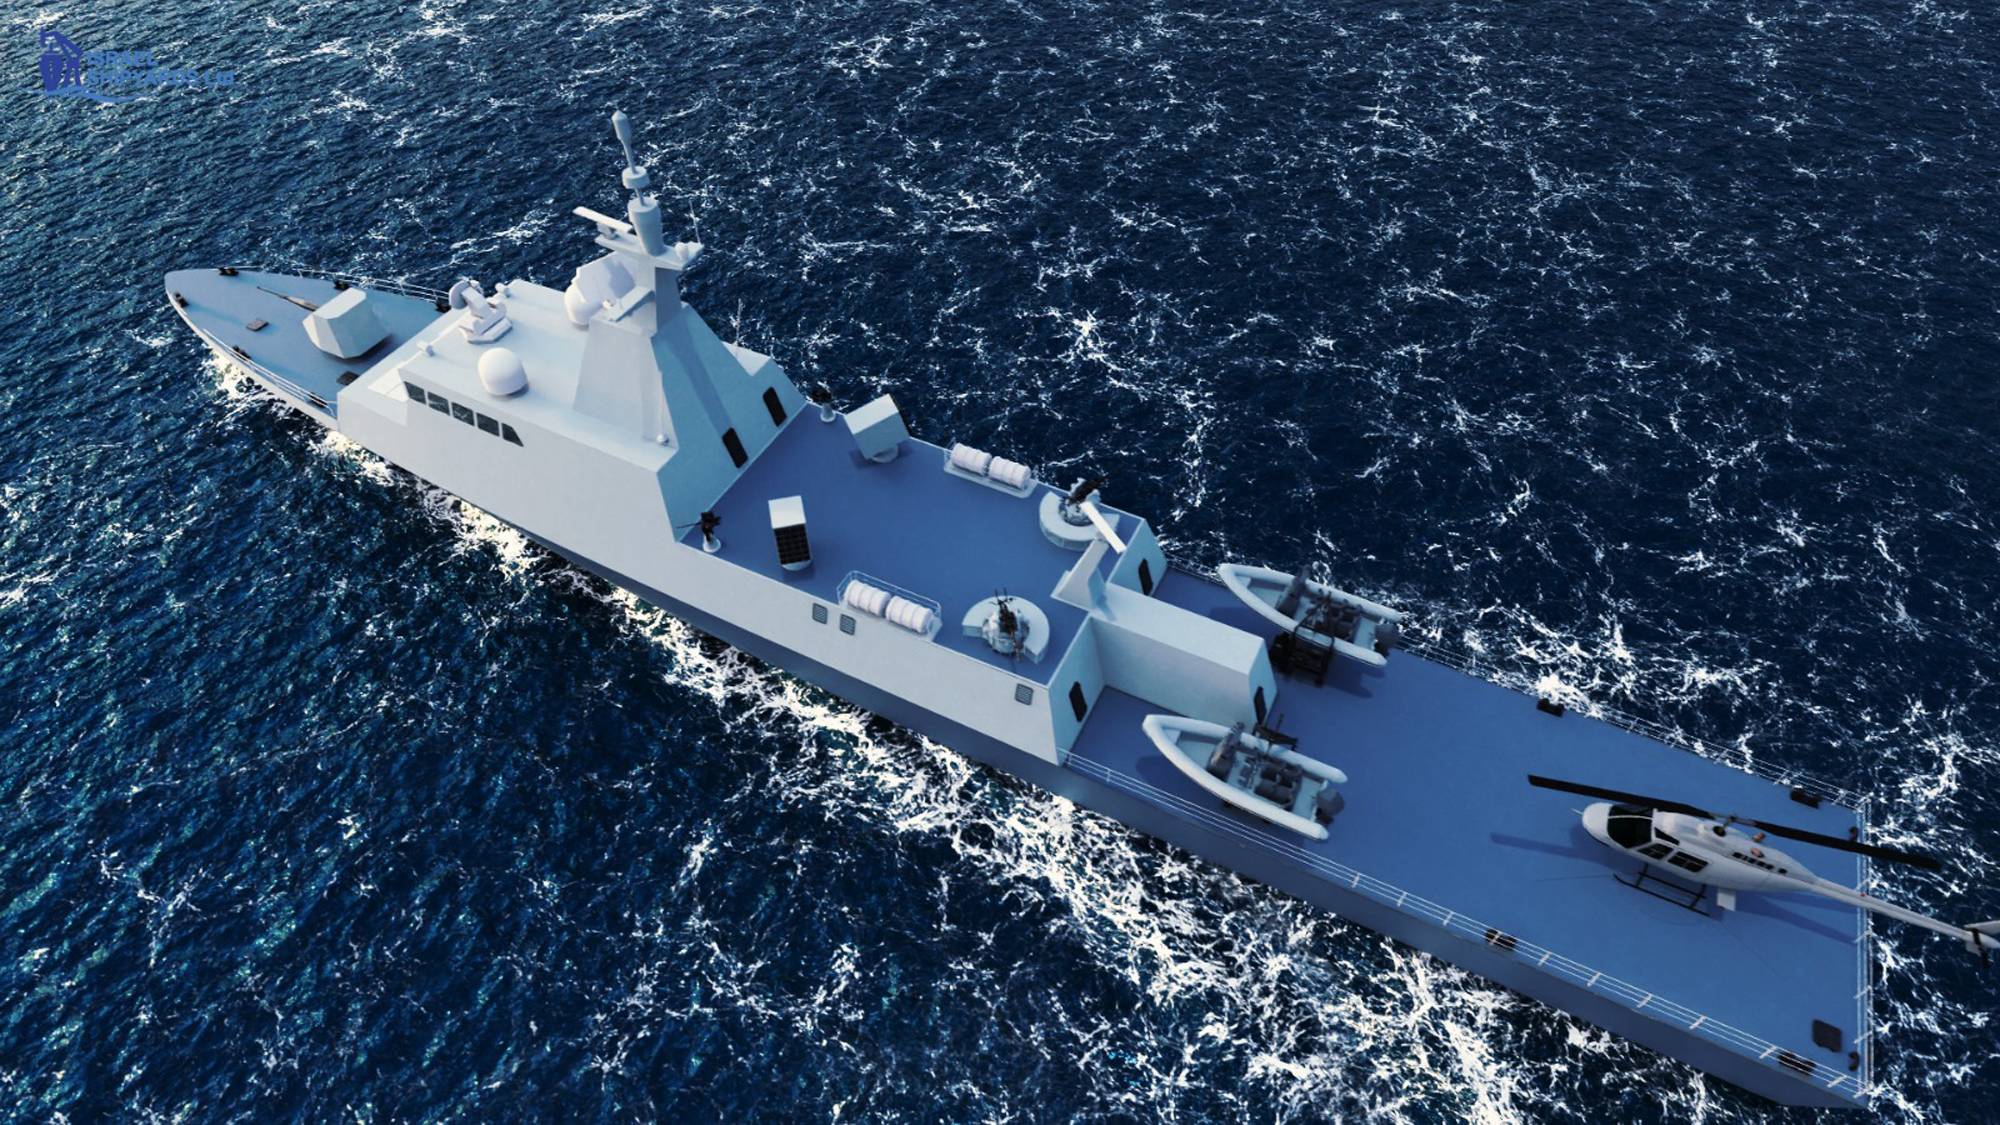 https://www.marinelink.com/news/israel-shipyards-debuts-saar-class-500346